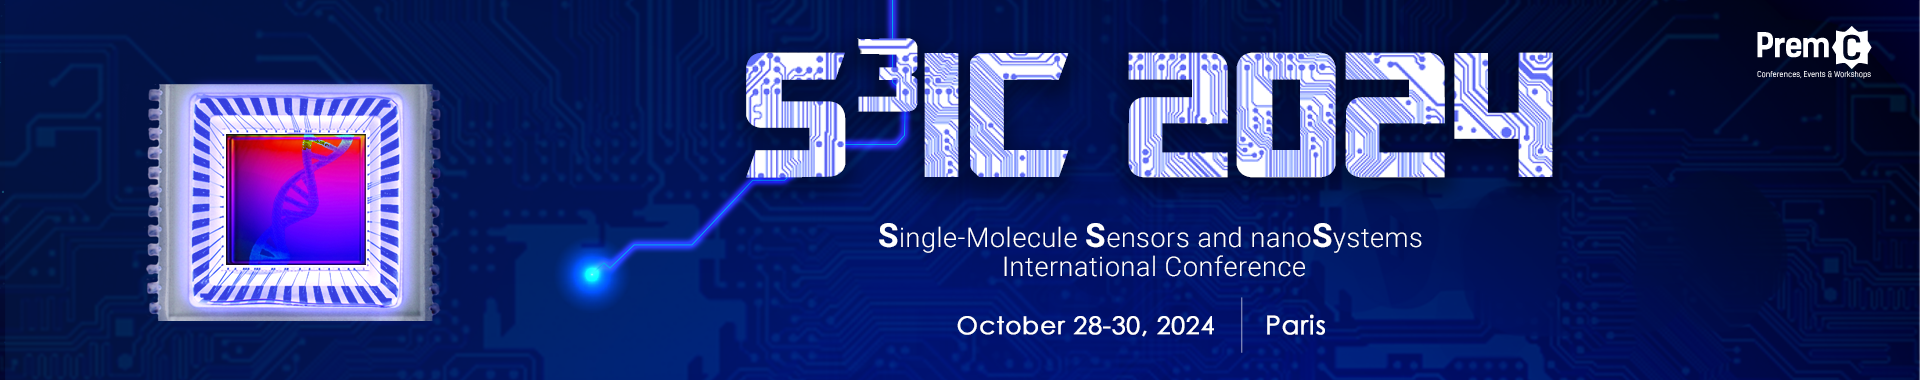 Single-Molecule Sensors and NanoSystems International Conference Banner